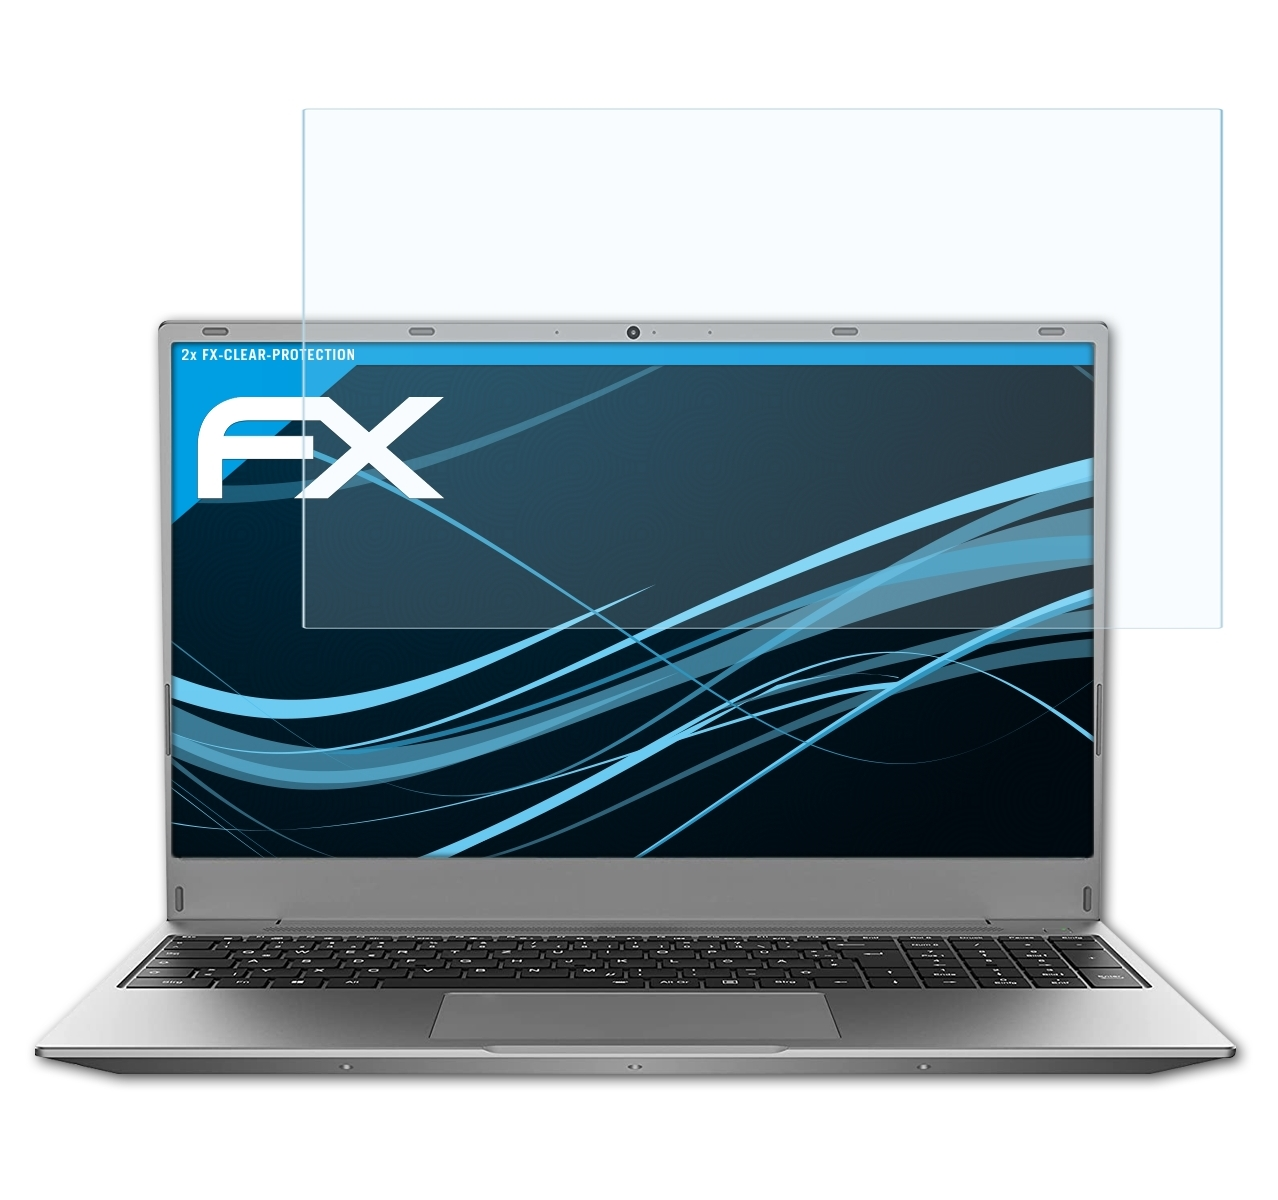 FX-Clear AKOYA 2x ATFOLIX (MD63890)) E16402 Displayschutz(für Medion